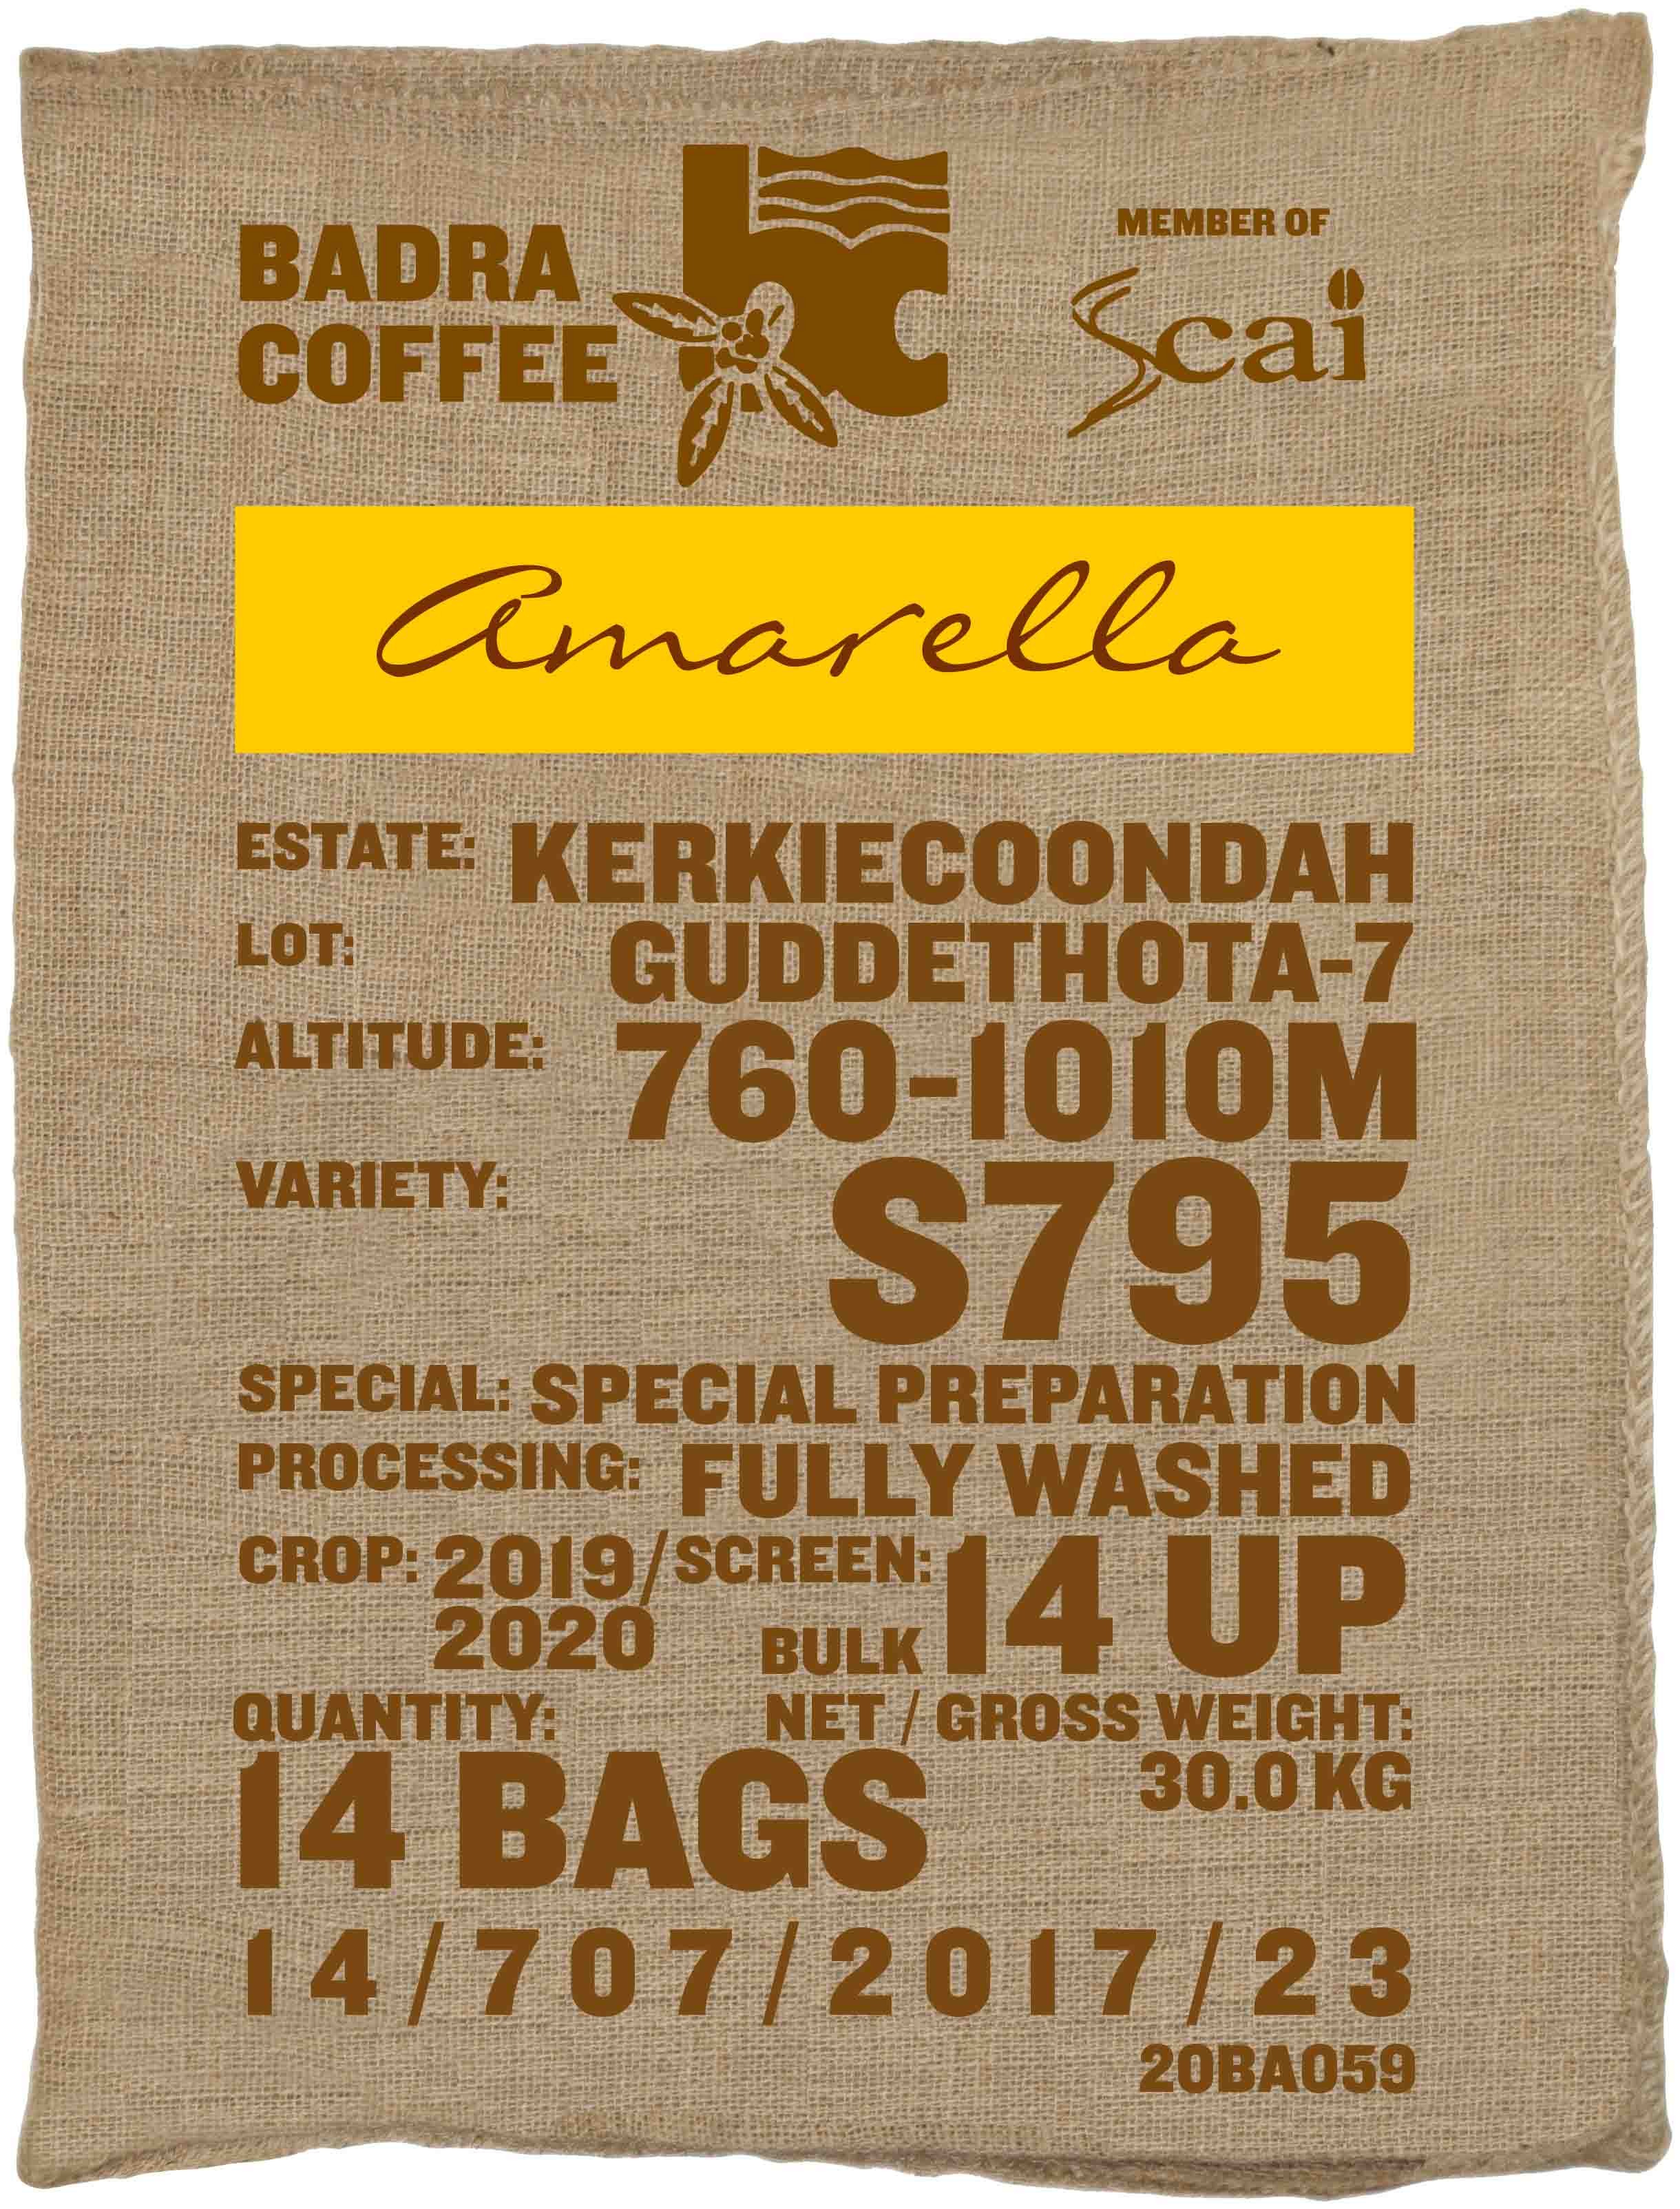 Ein Rohkaffeesack amarella Parzellenkaffee Varietät S795. Badra Estates Lot Guddethota 7.